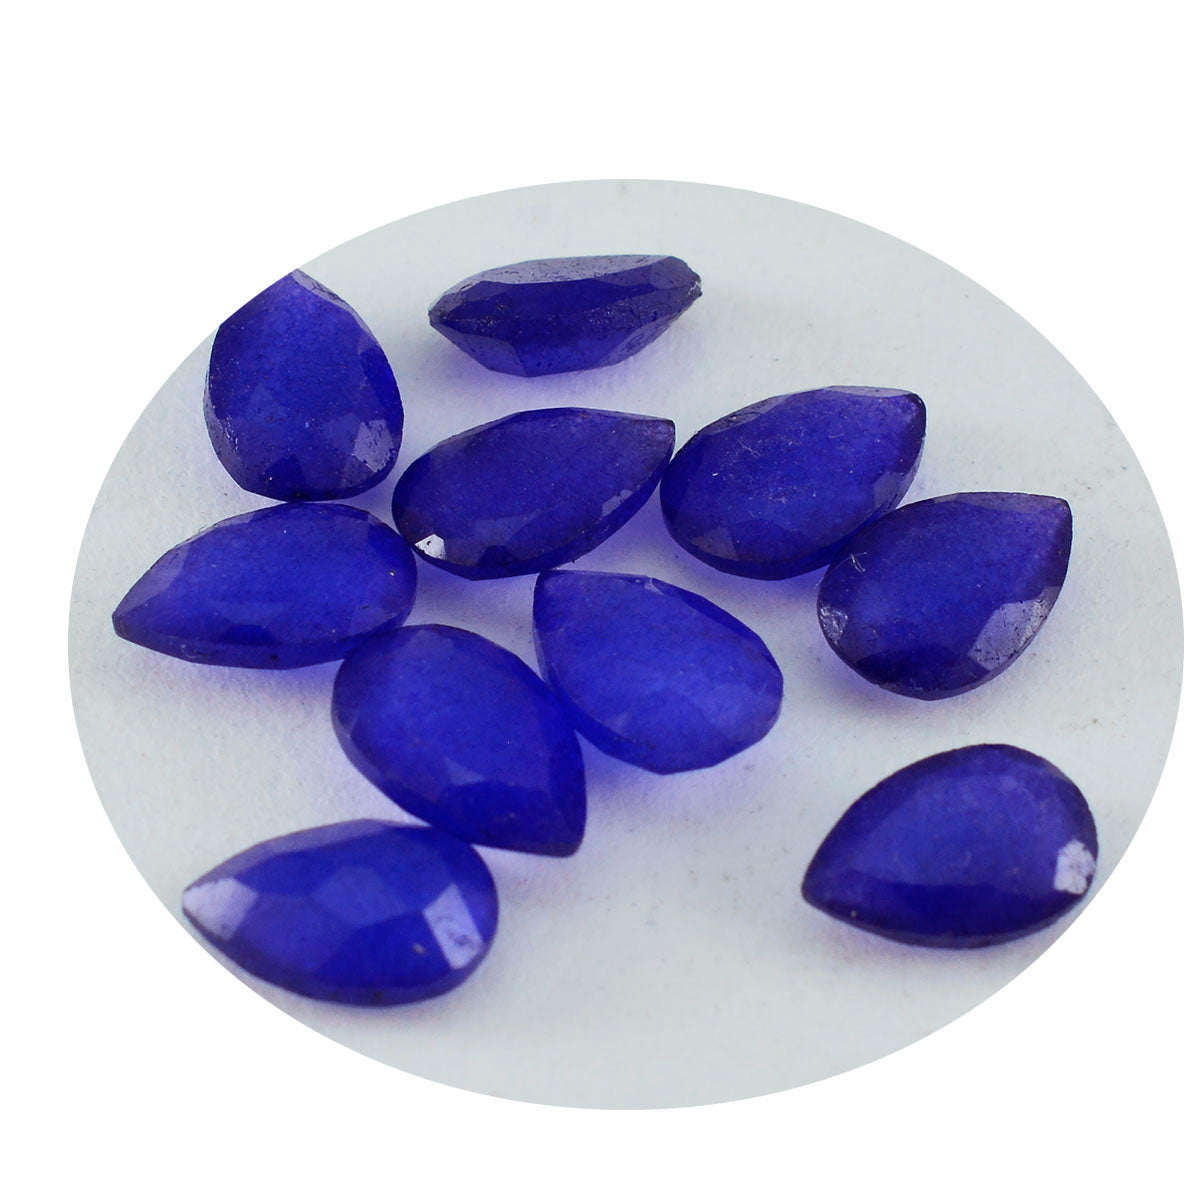 Riyogems 1 pieza jaspe azul Natural facetado 5x7mm forma de pera gemas de calidad encantadoras